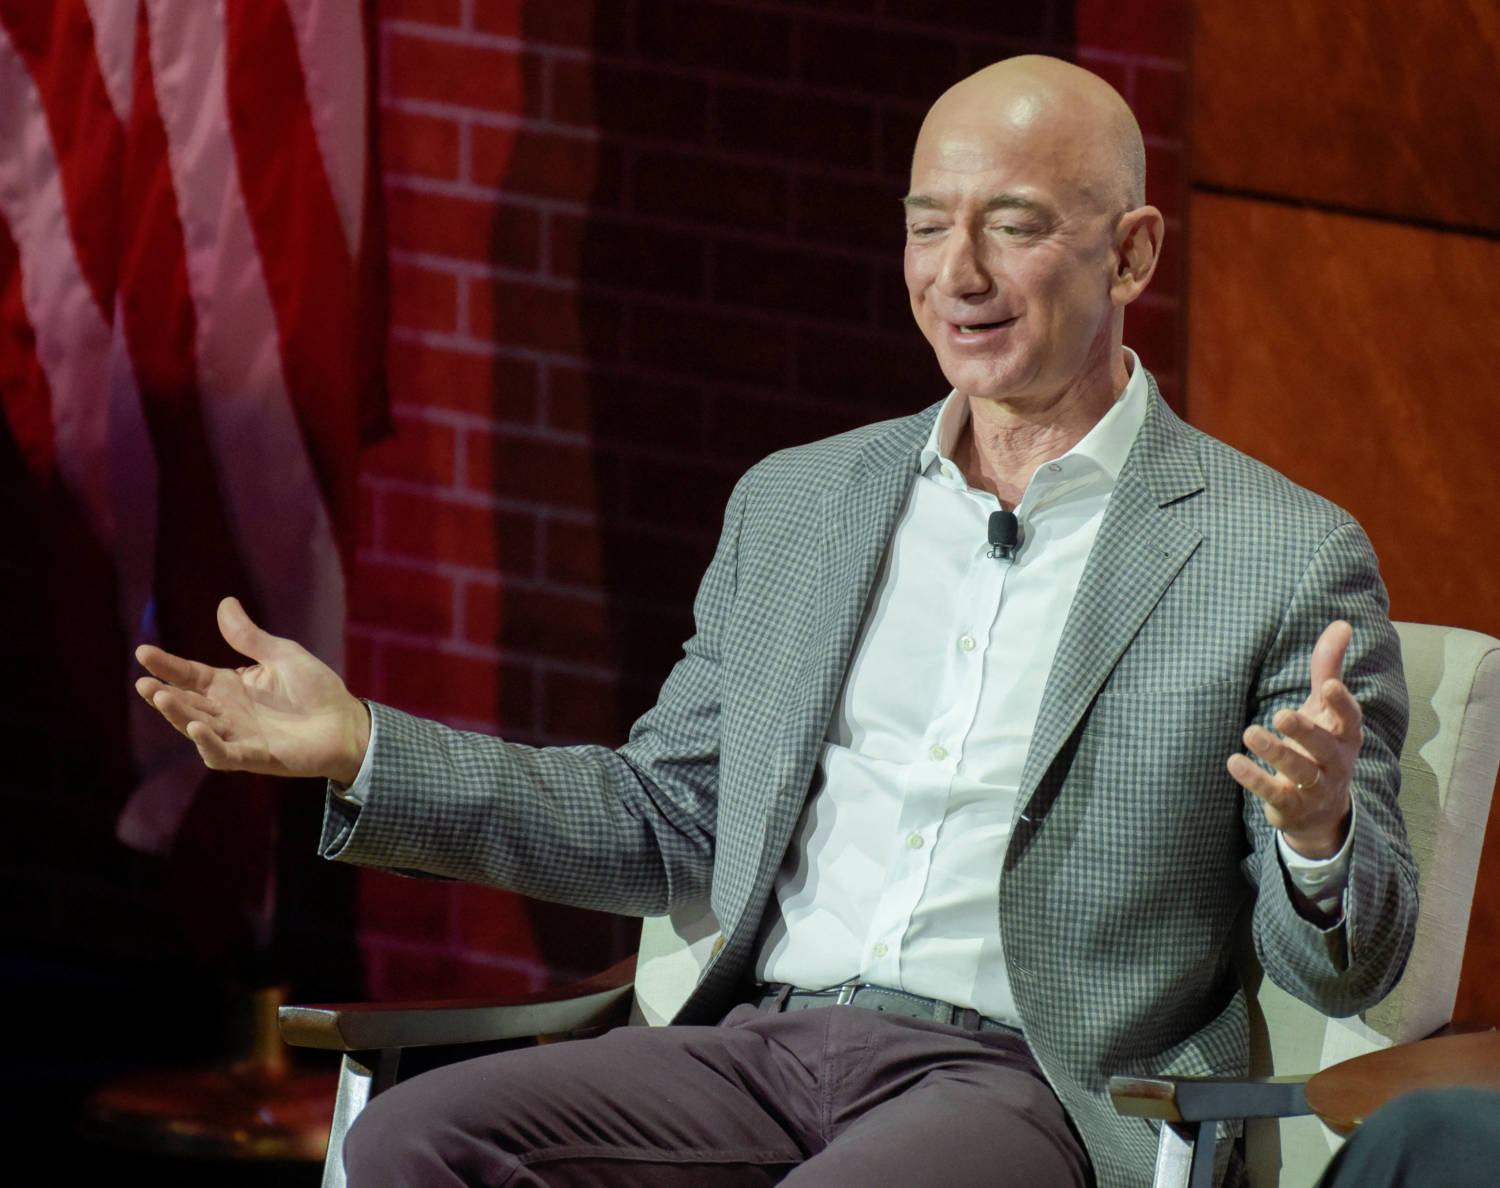 File Photo: Jeff Bezos Of Amazon Speaks At The Bush Center's Forum On Leadership In Dallas